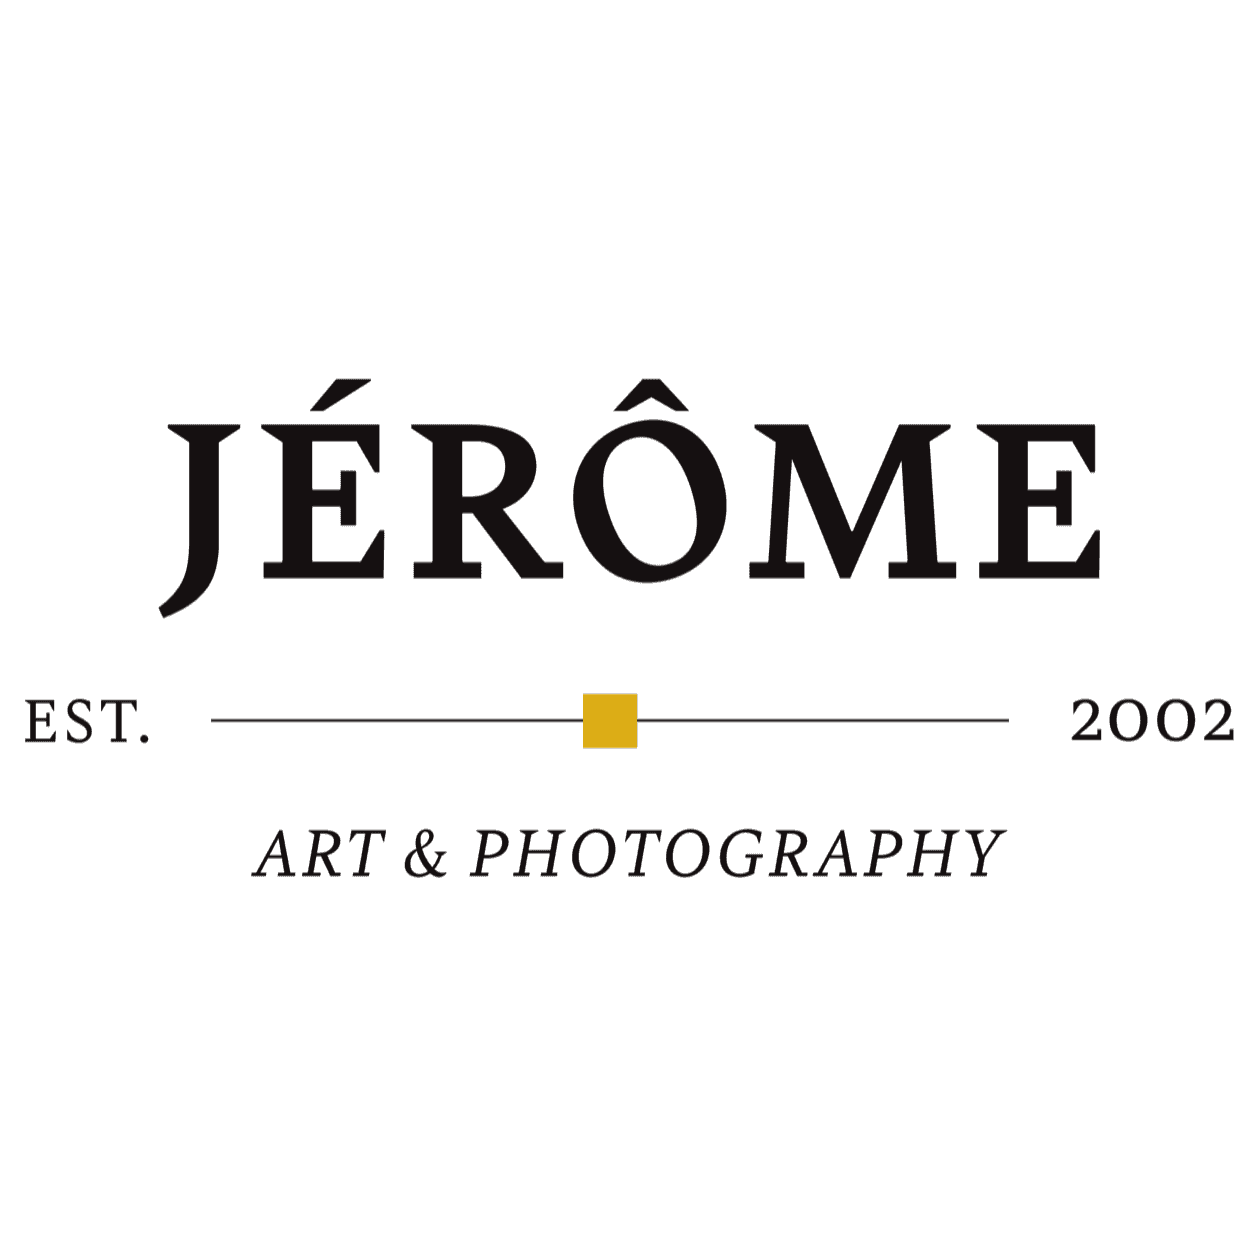 <p><a href="https://jerome.art/" rel="noopener noreferrer" target="_blank" style="color: rgb(0, 55, 0);">Jérôme Art &amp; Photography</a></p> logo